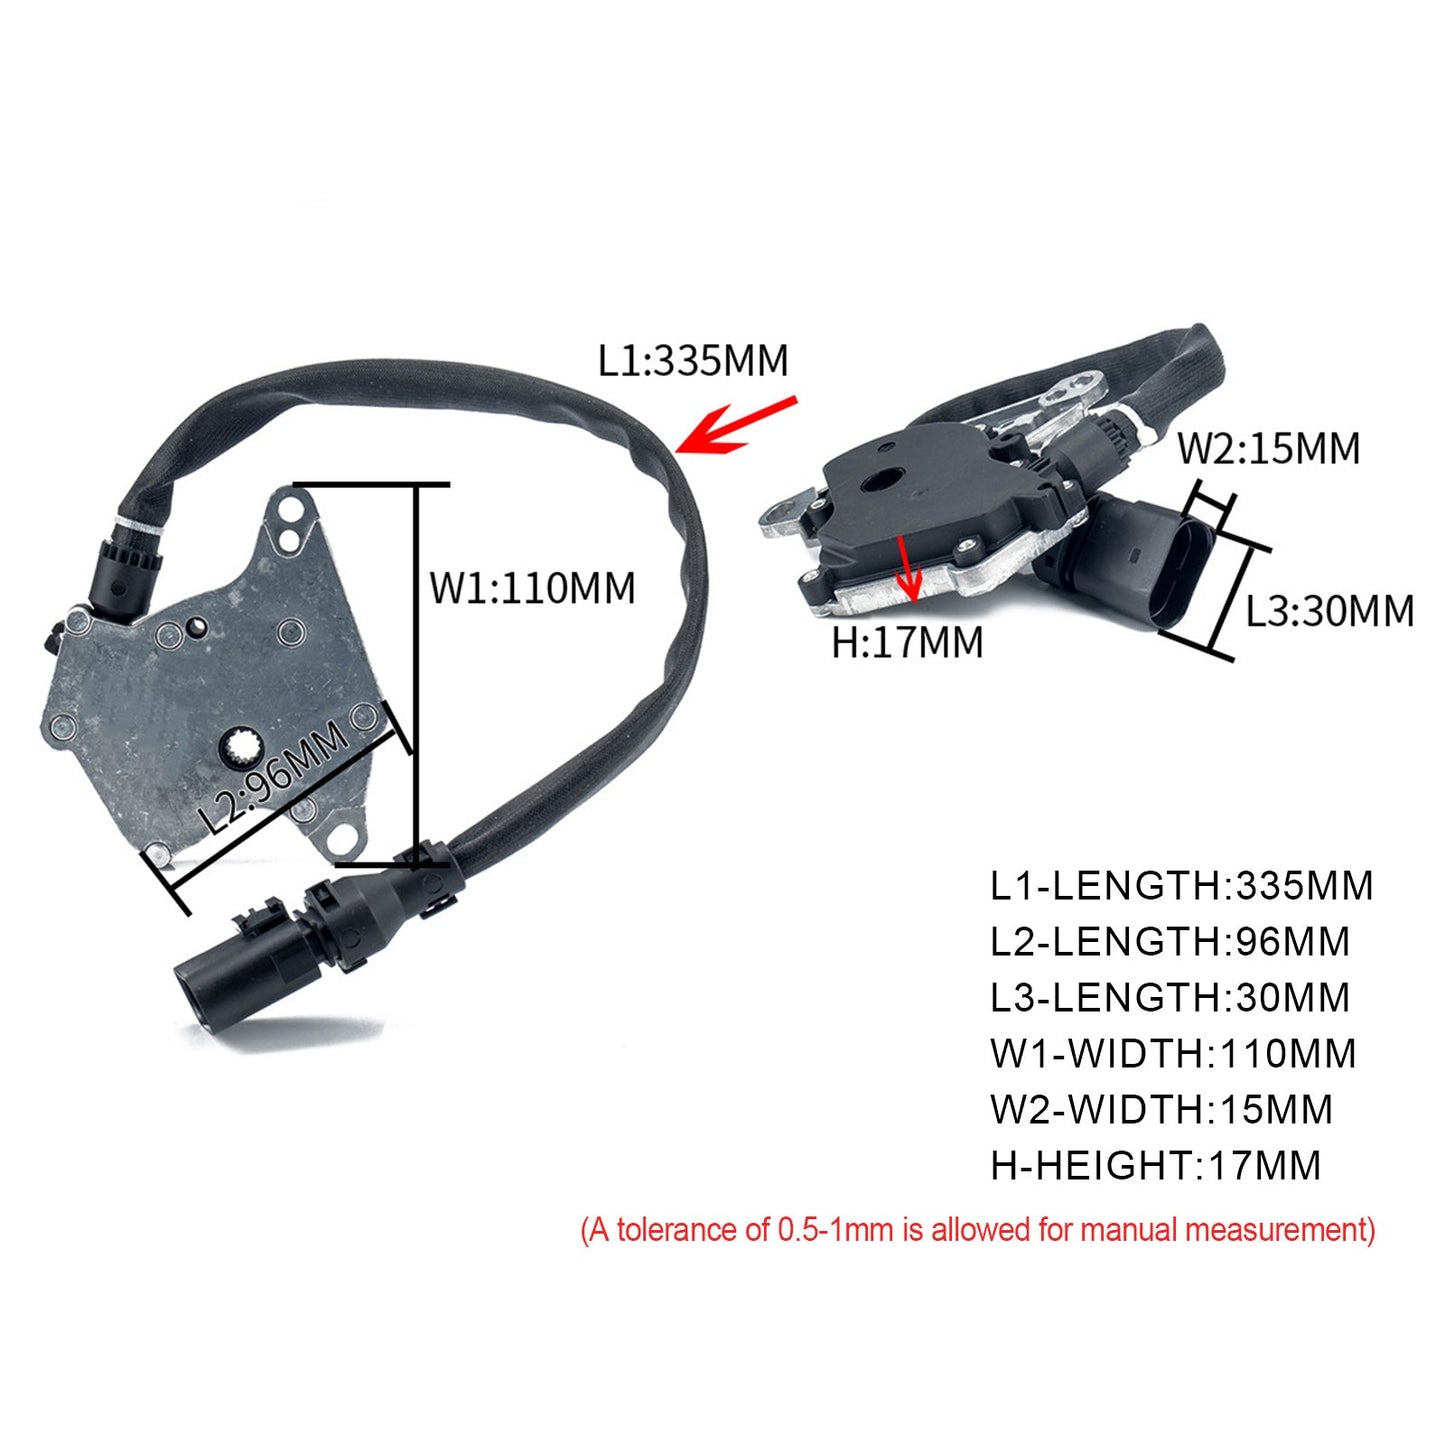 Transmission Neutral Safety Switch For Audi A4 A6/8 01V919821B